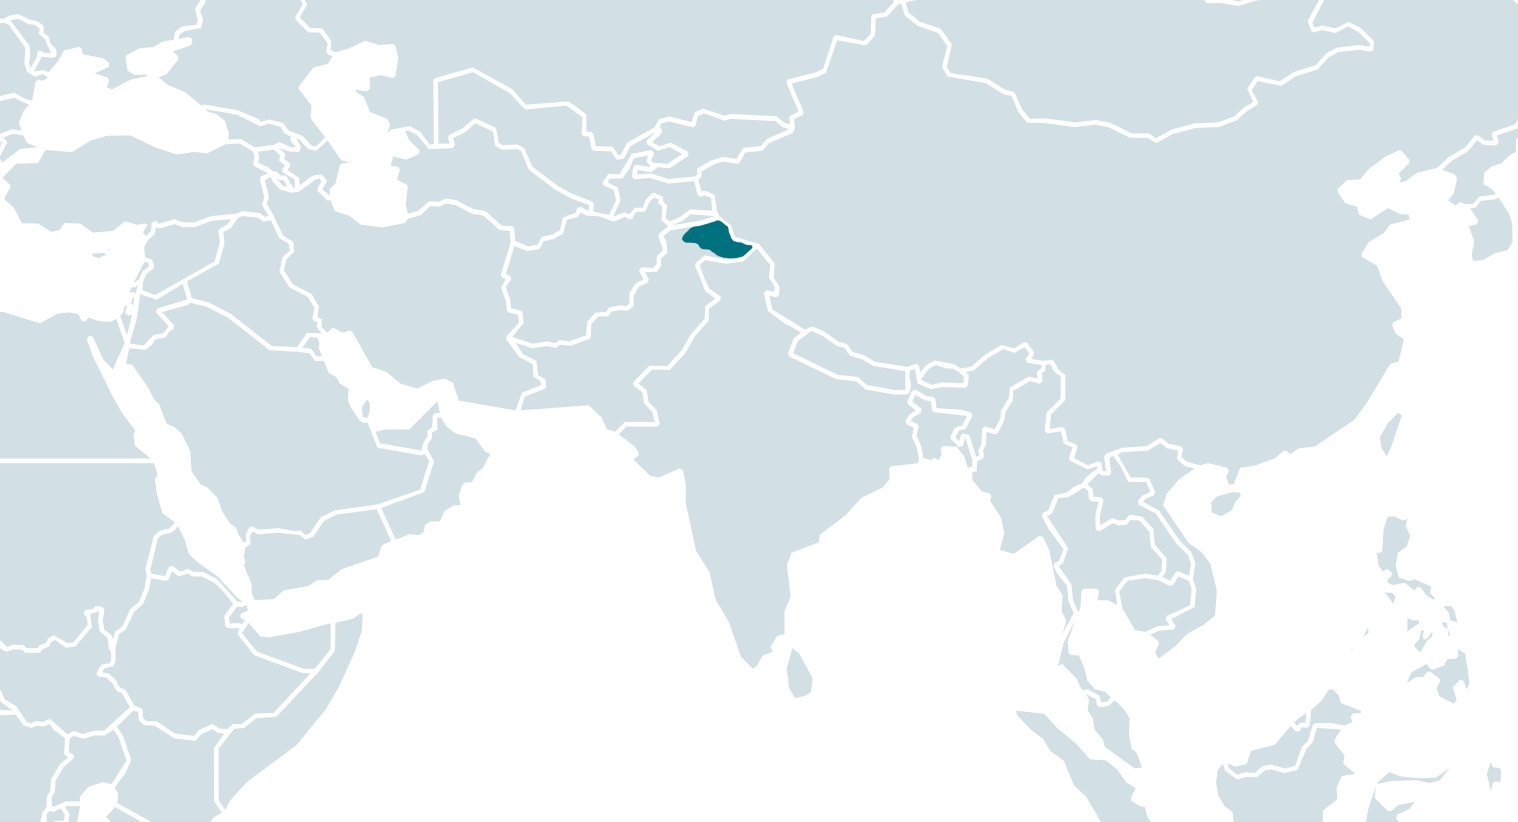 Figure 1 The Gilgit-Baltistan region